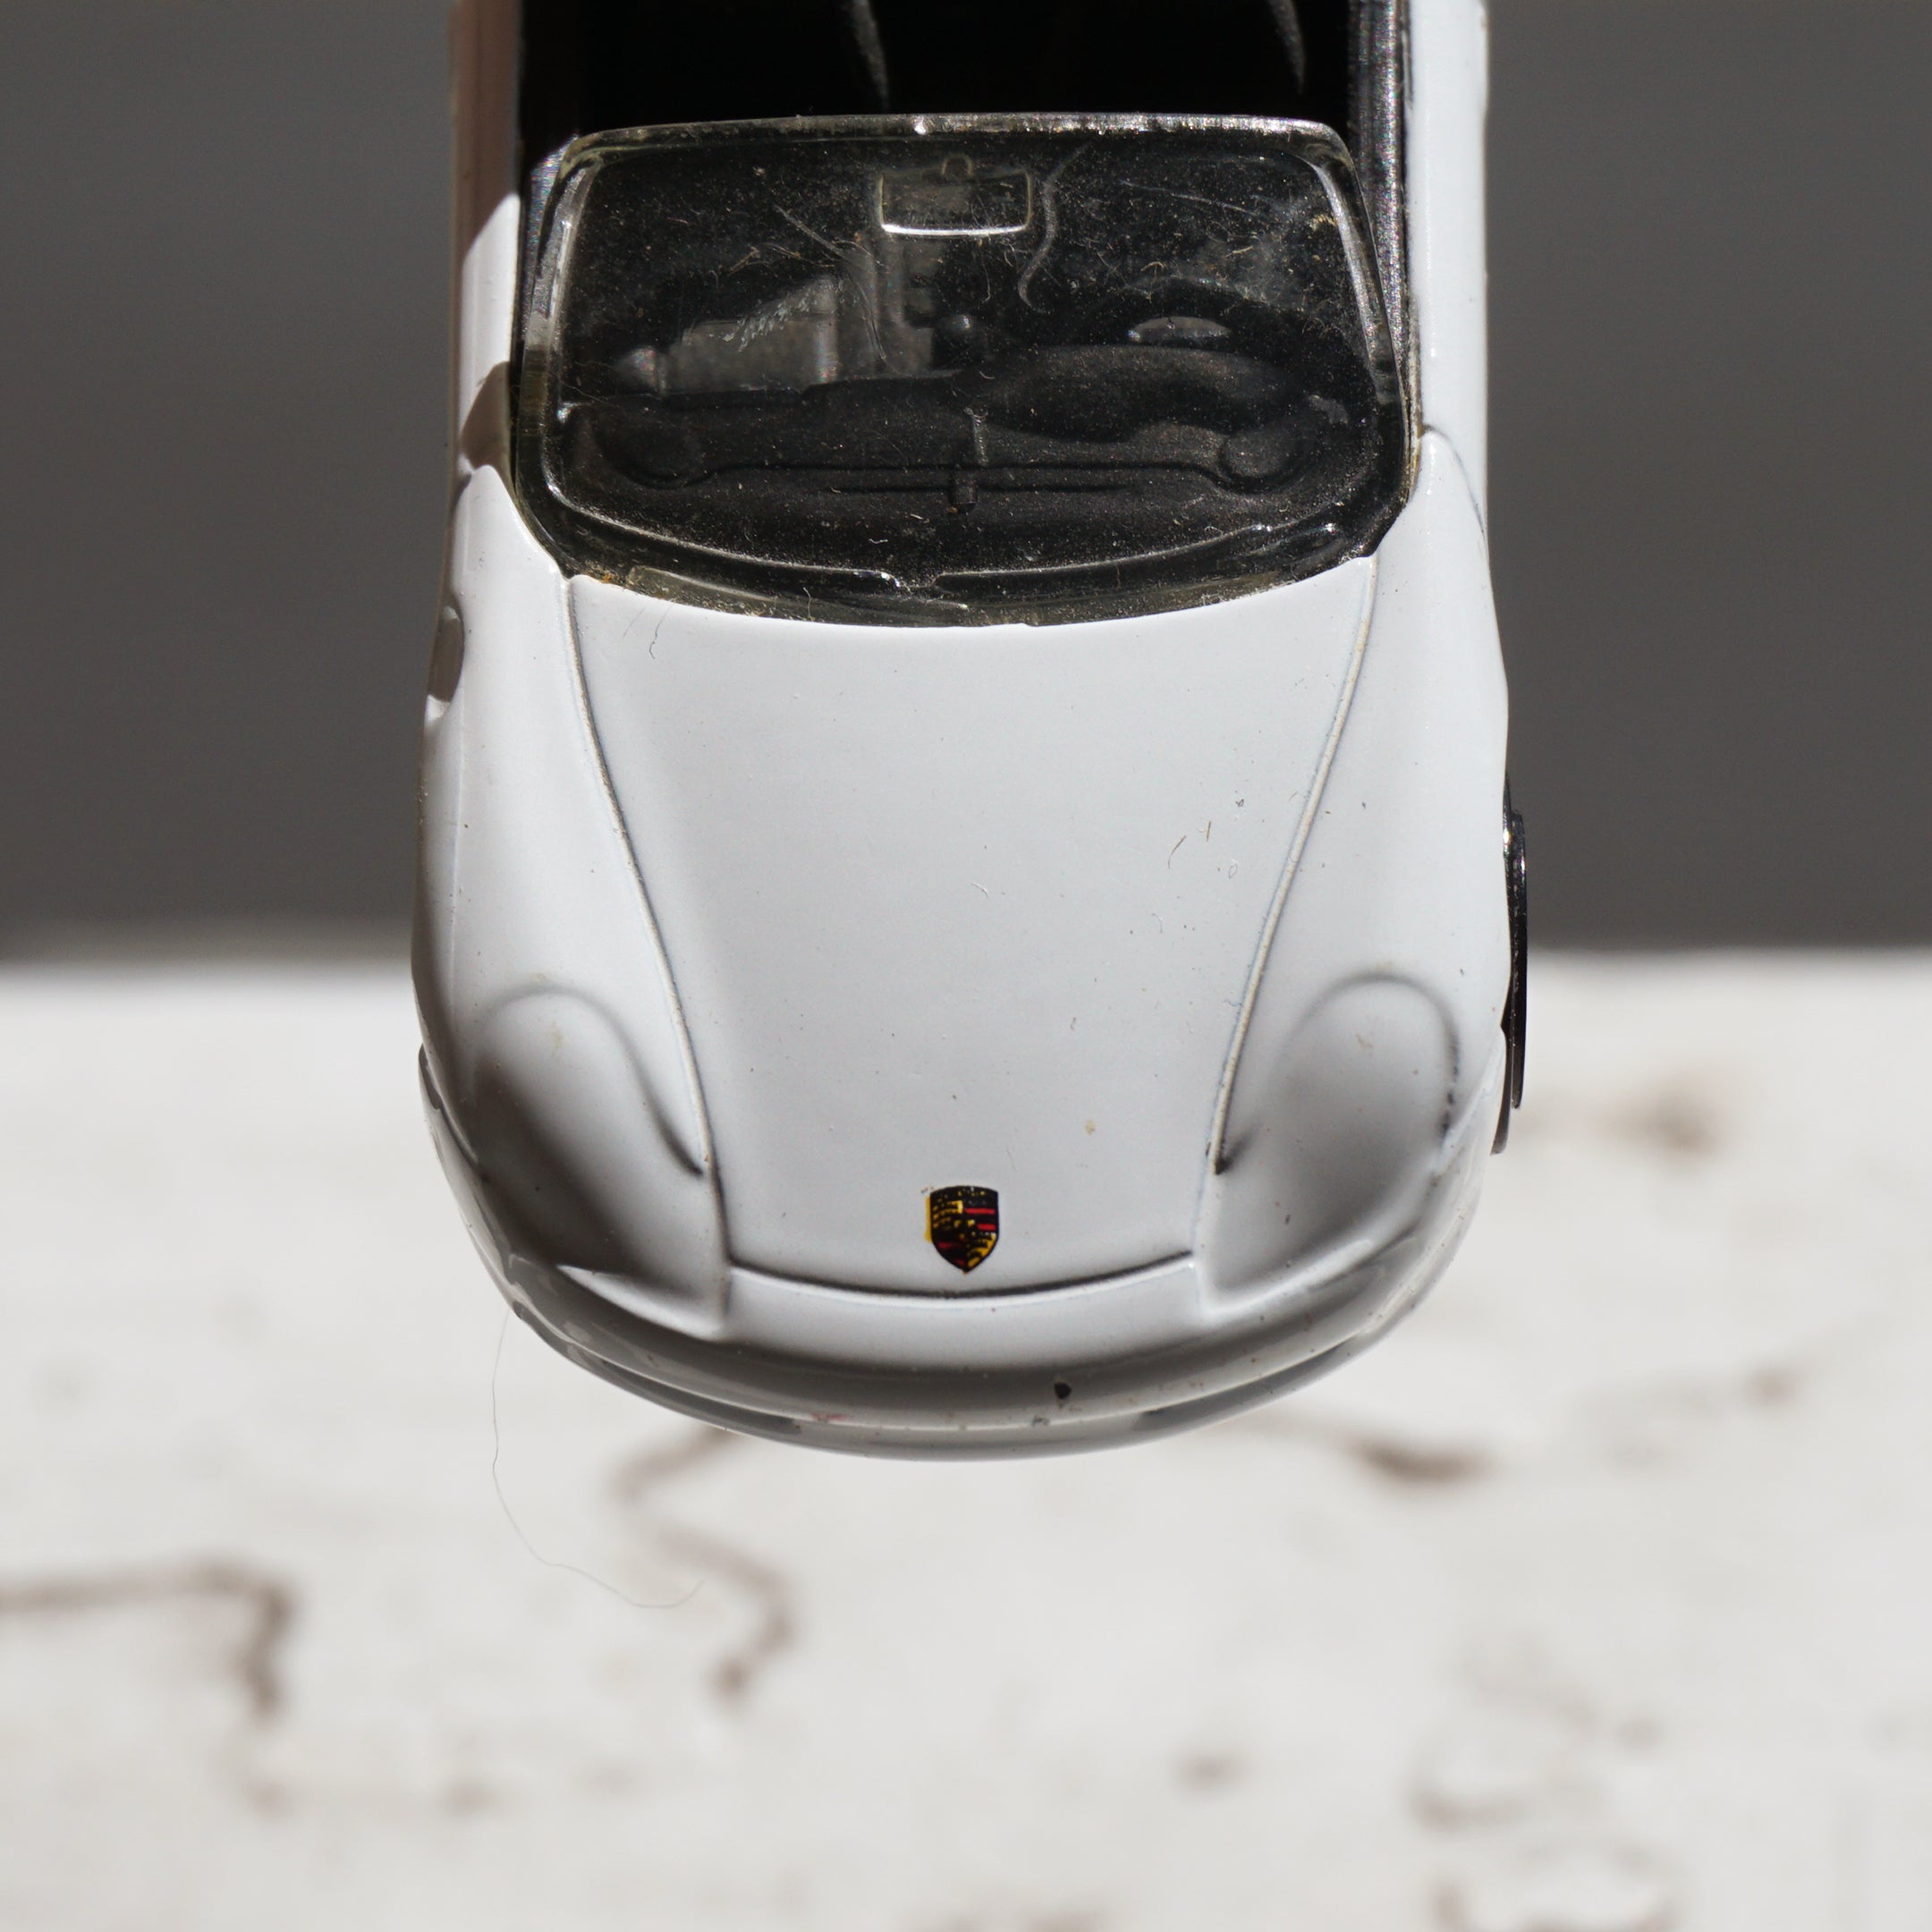 1998 Vintage Diecast MATCHBOX White Convertible Porsche Boxster Toy Car. Mattel.